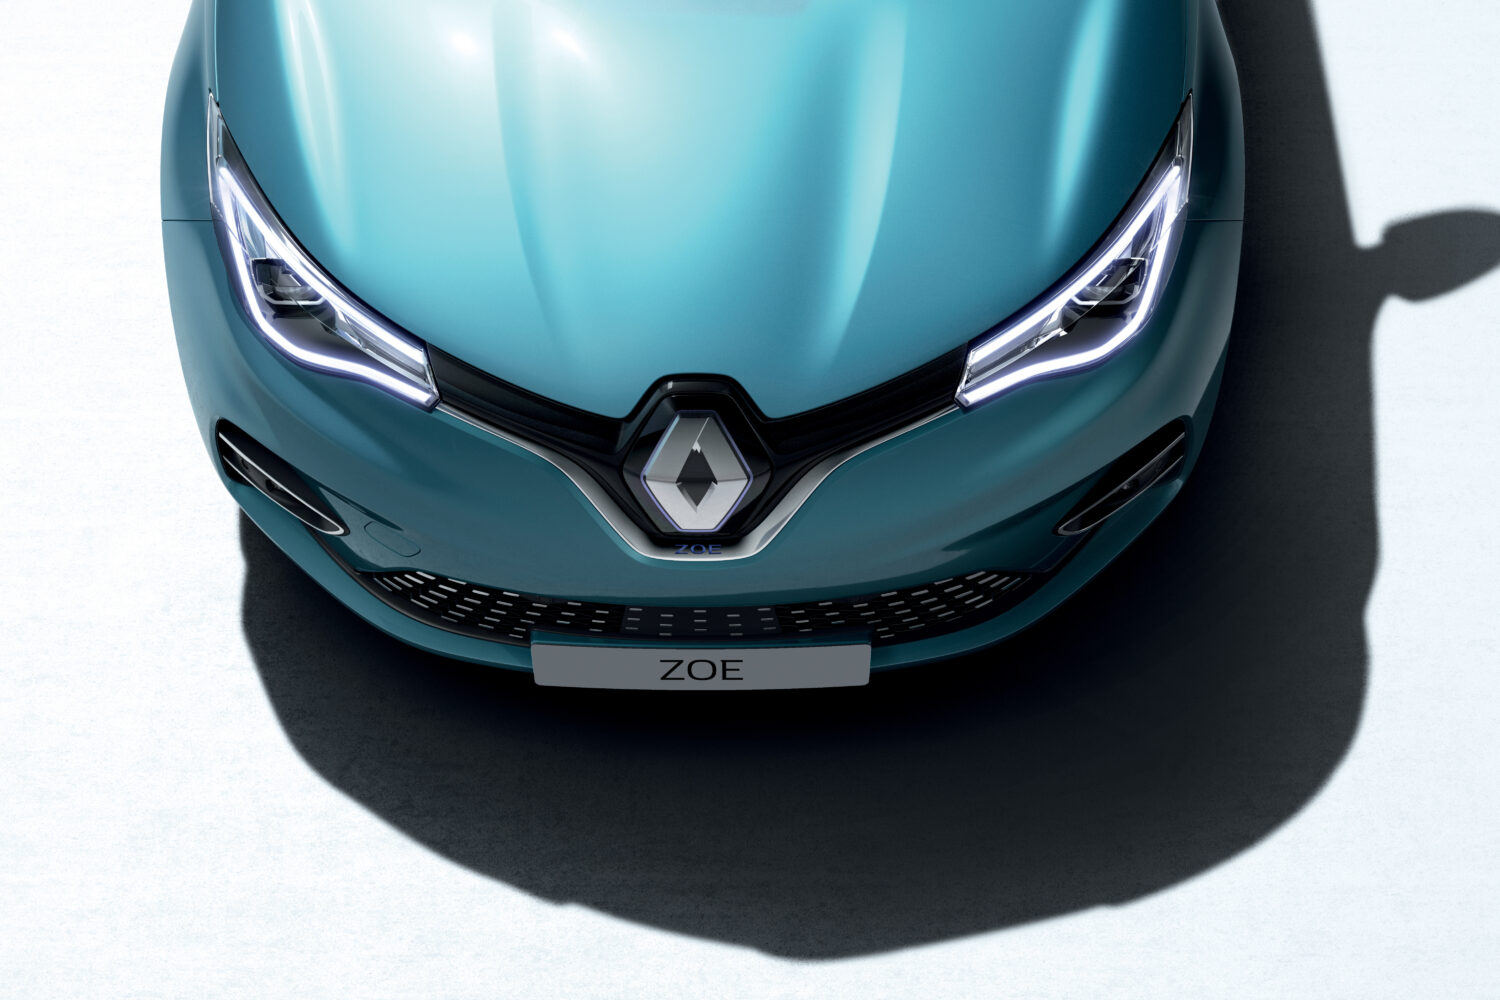 2019 - Nouvelle Renault ZOE.jpg